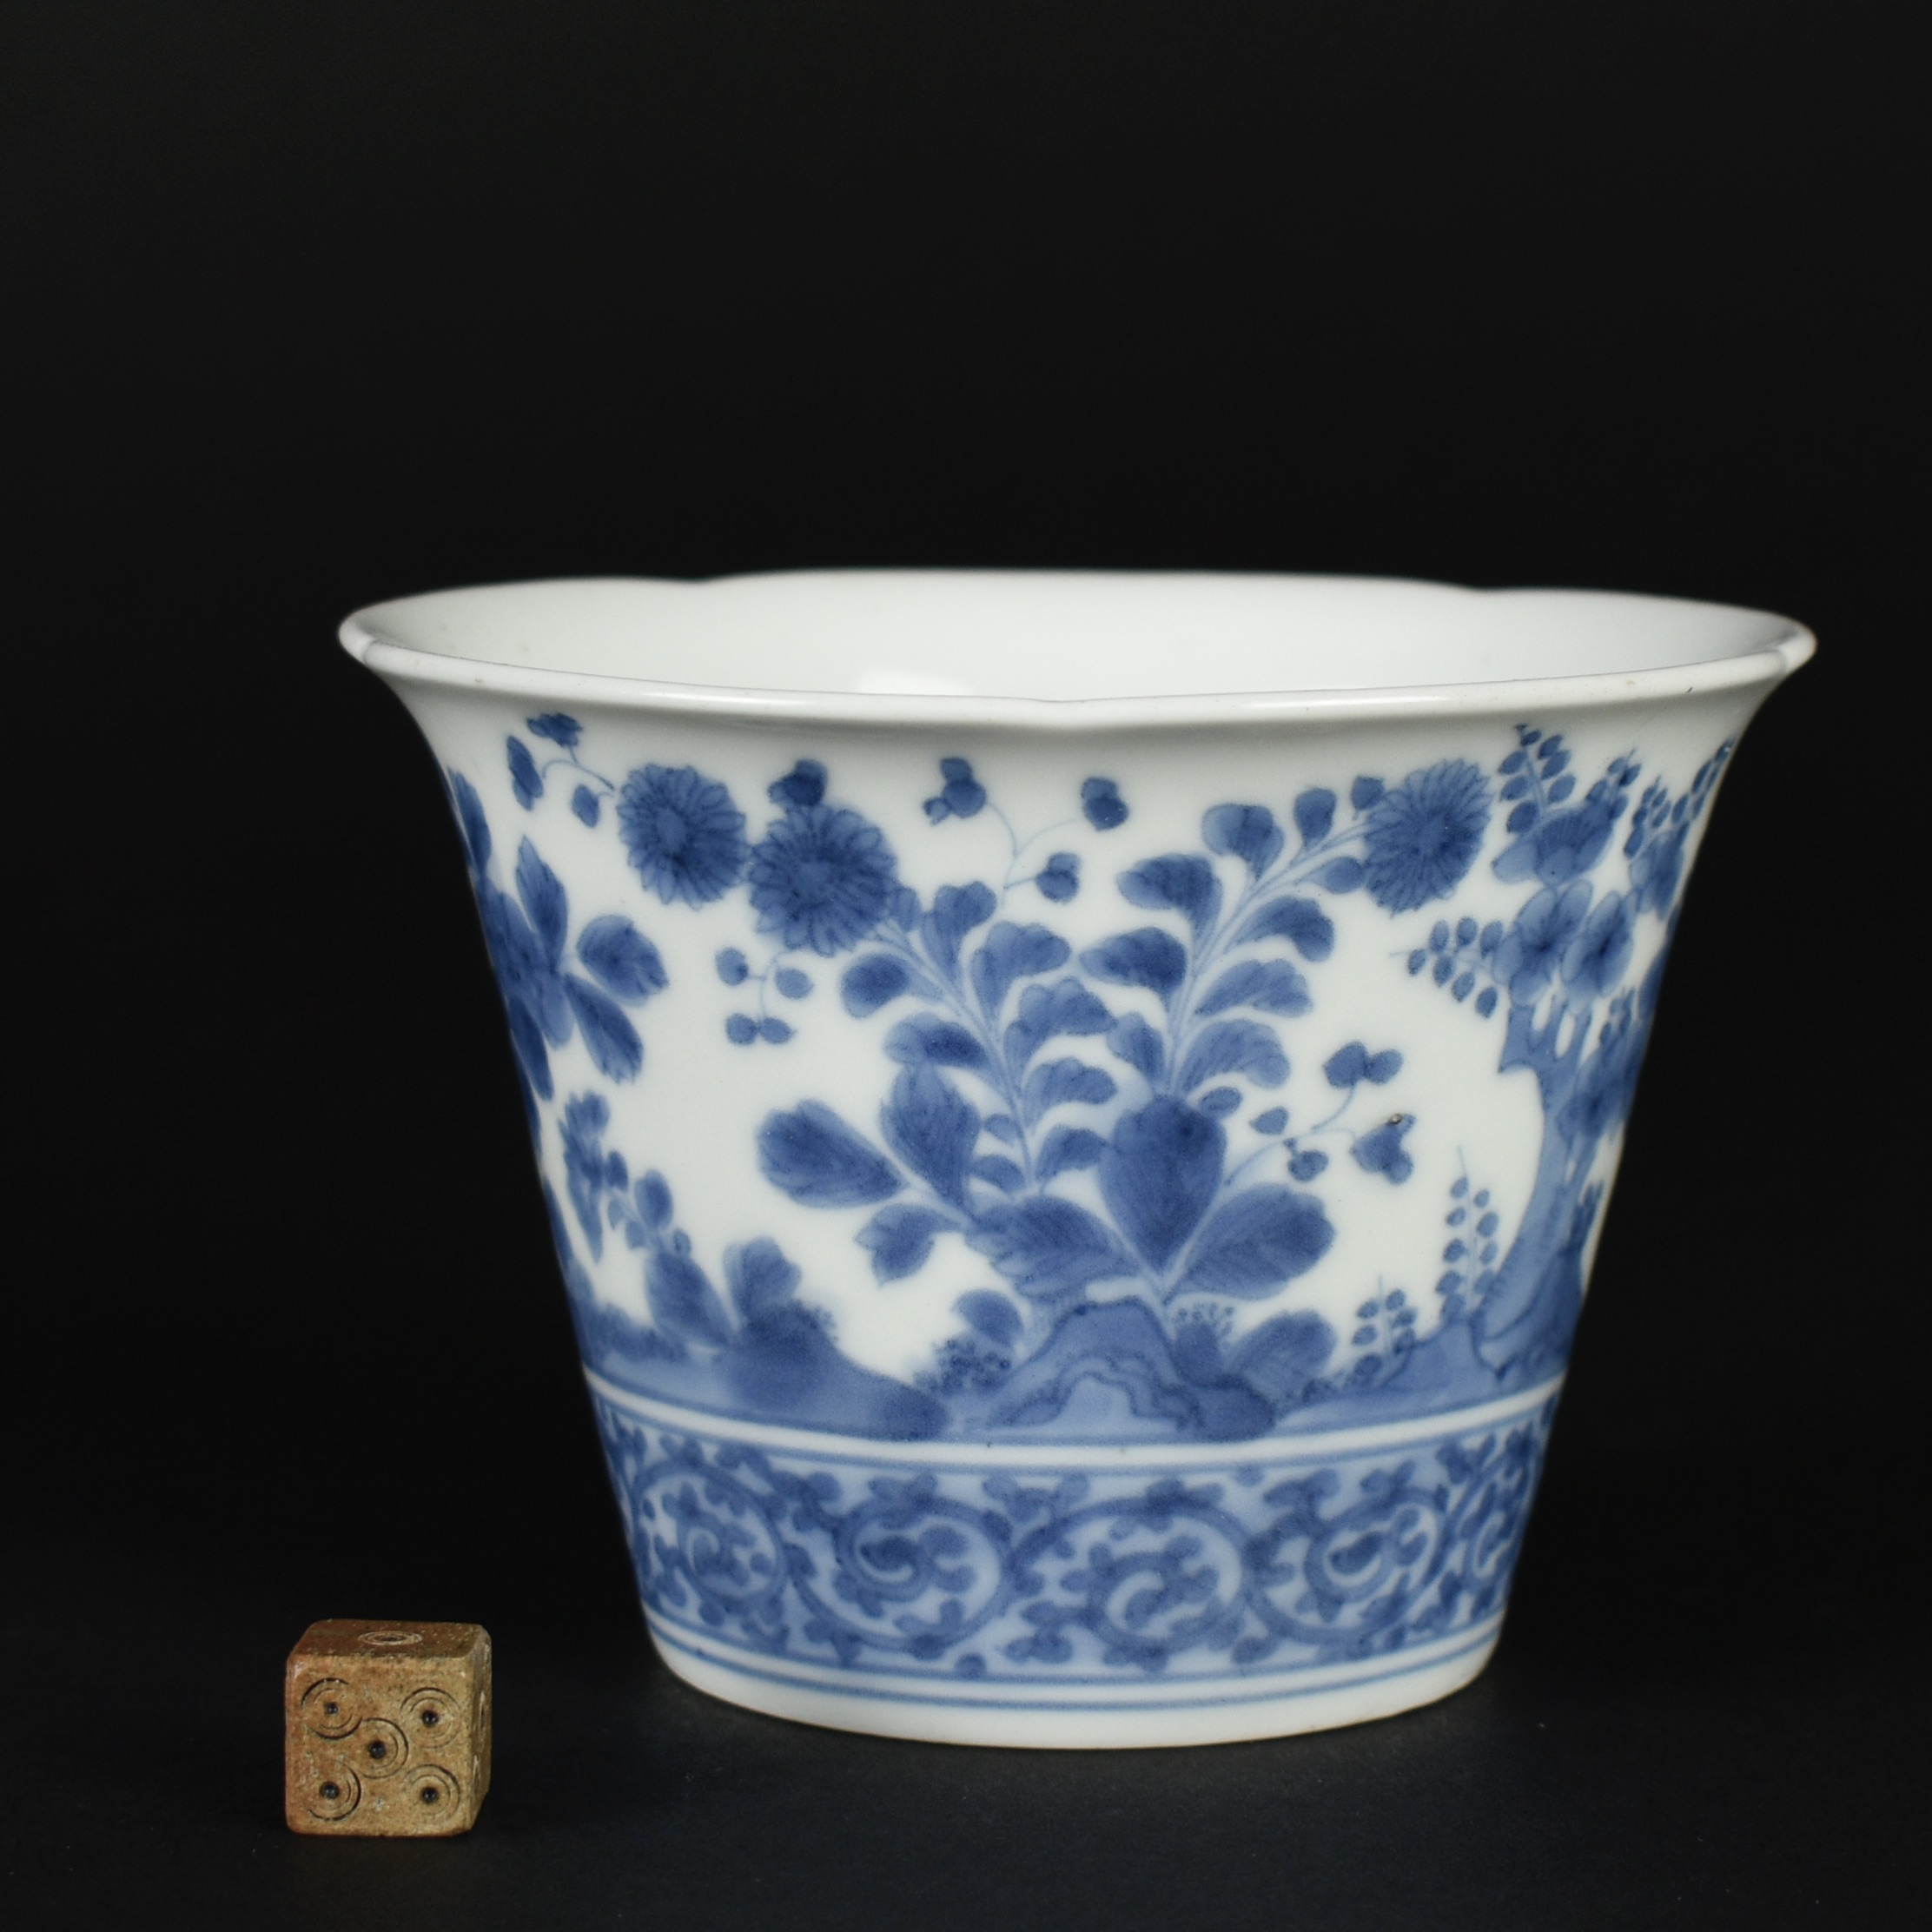  MILISTEN Blue and White Porcelain Palette Ceramic